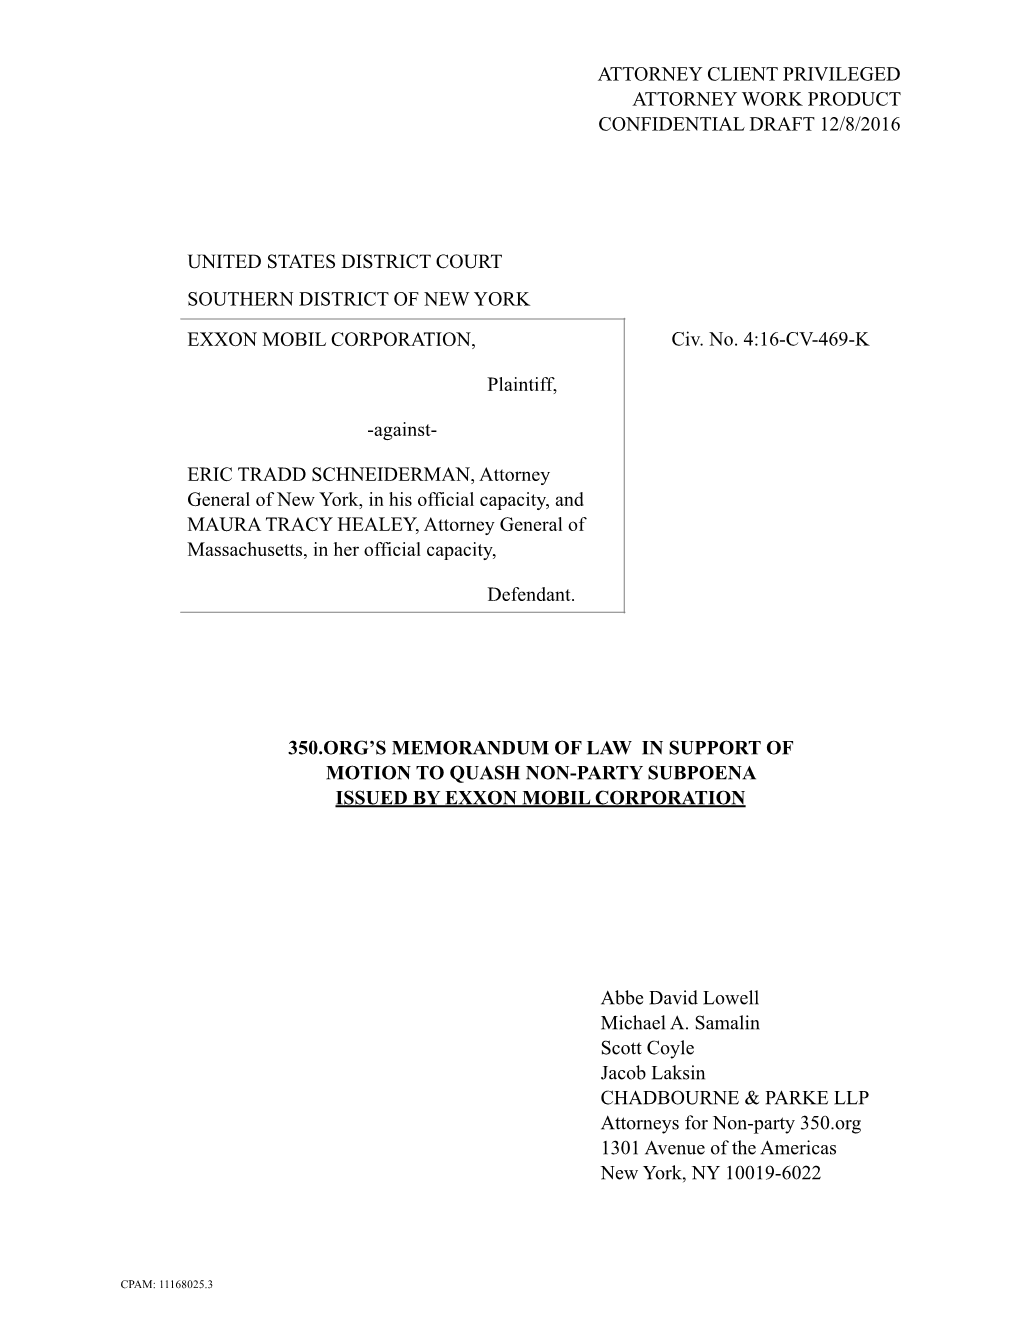 350.Org Motion to Quash Exxonmobil Subpoena